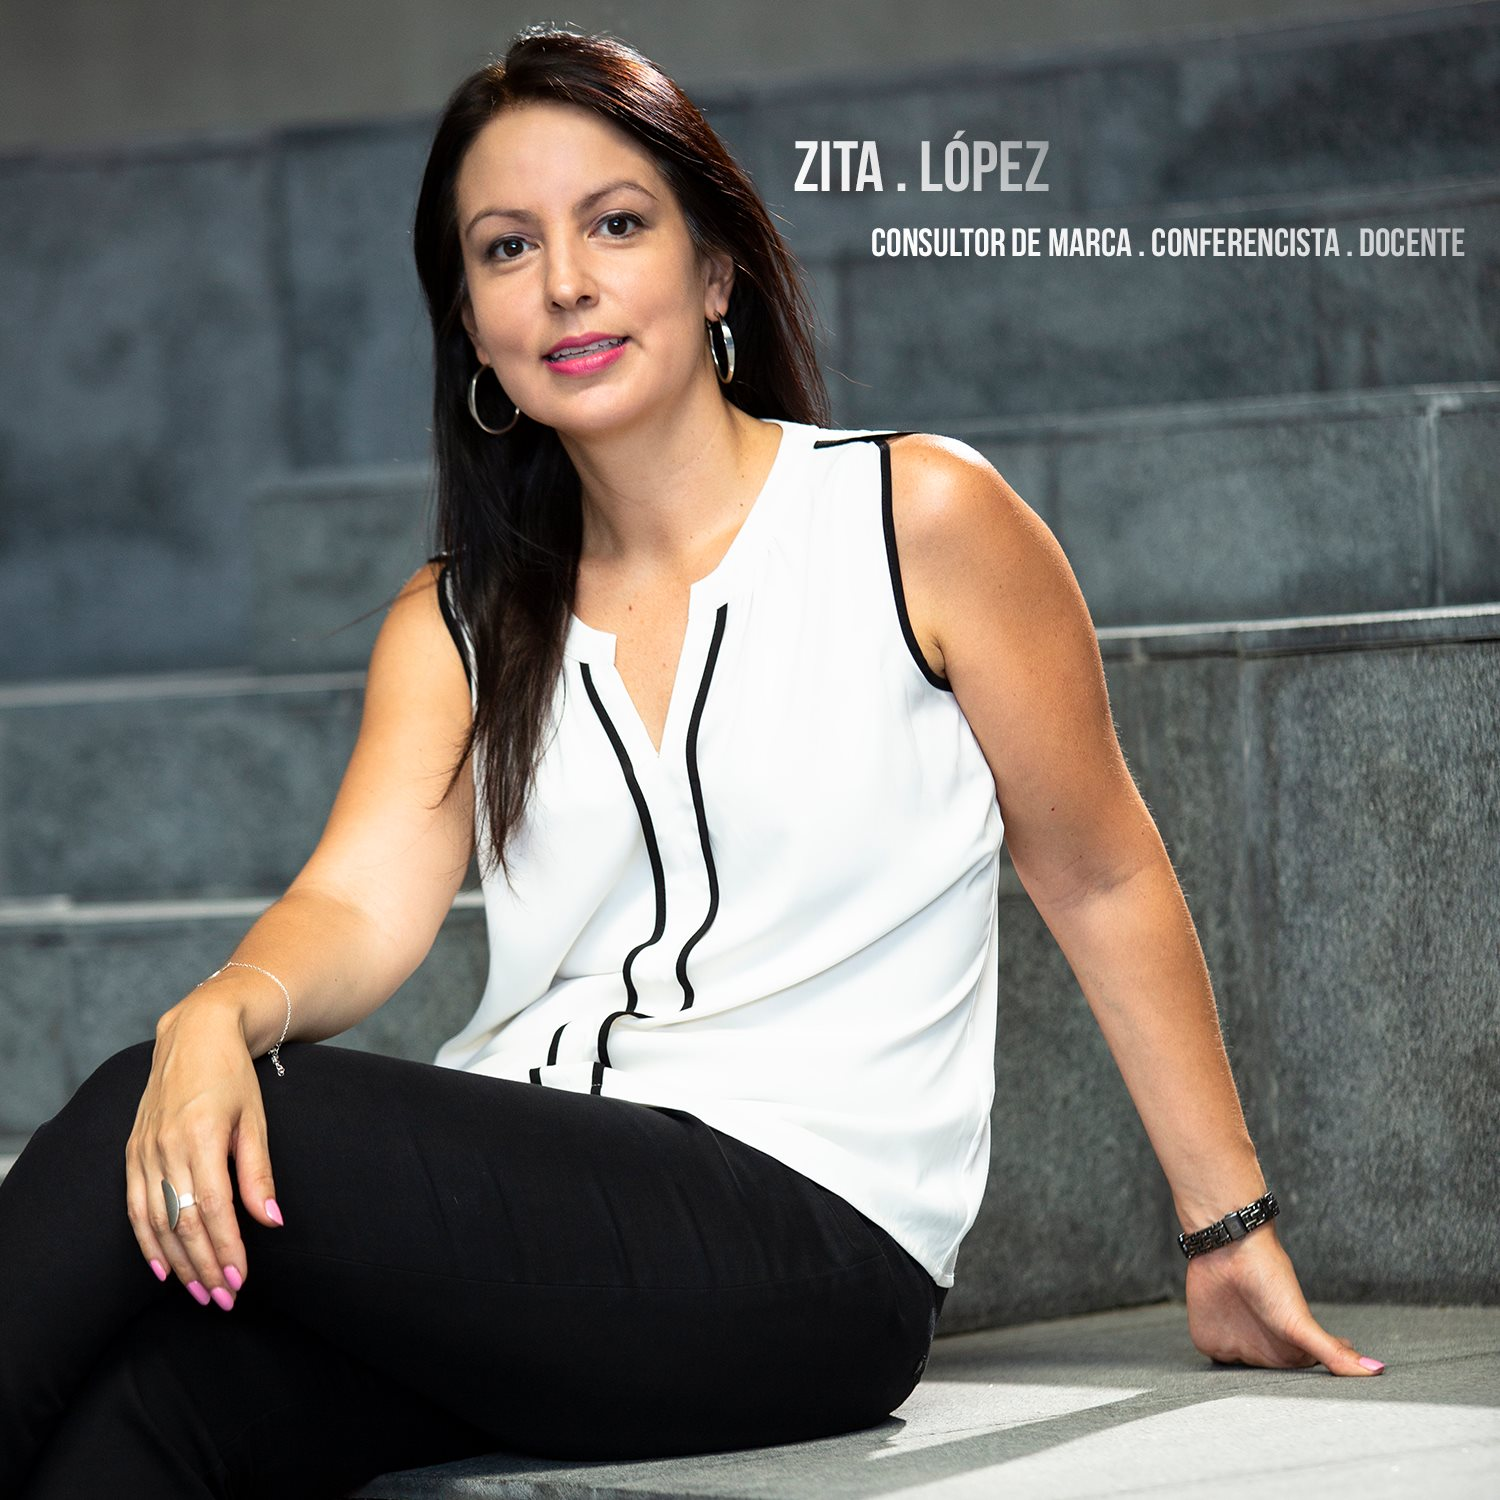 Zita N. López Bedolla